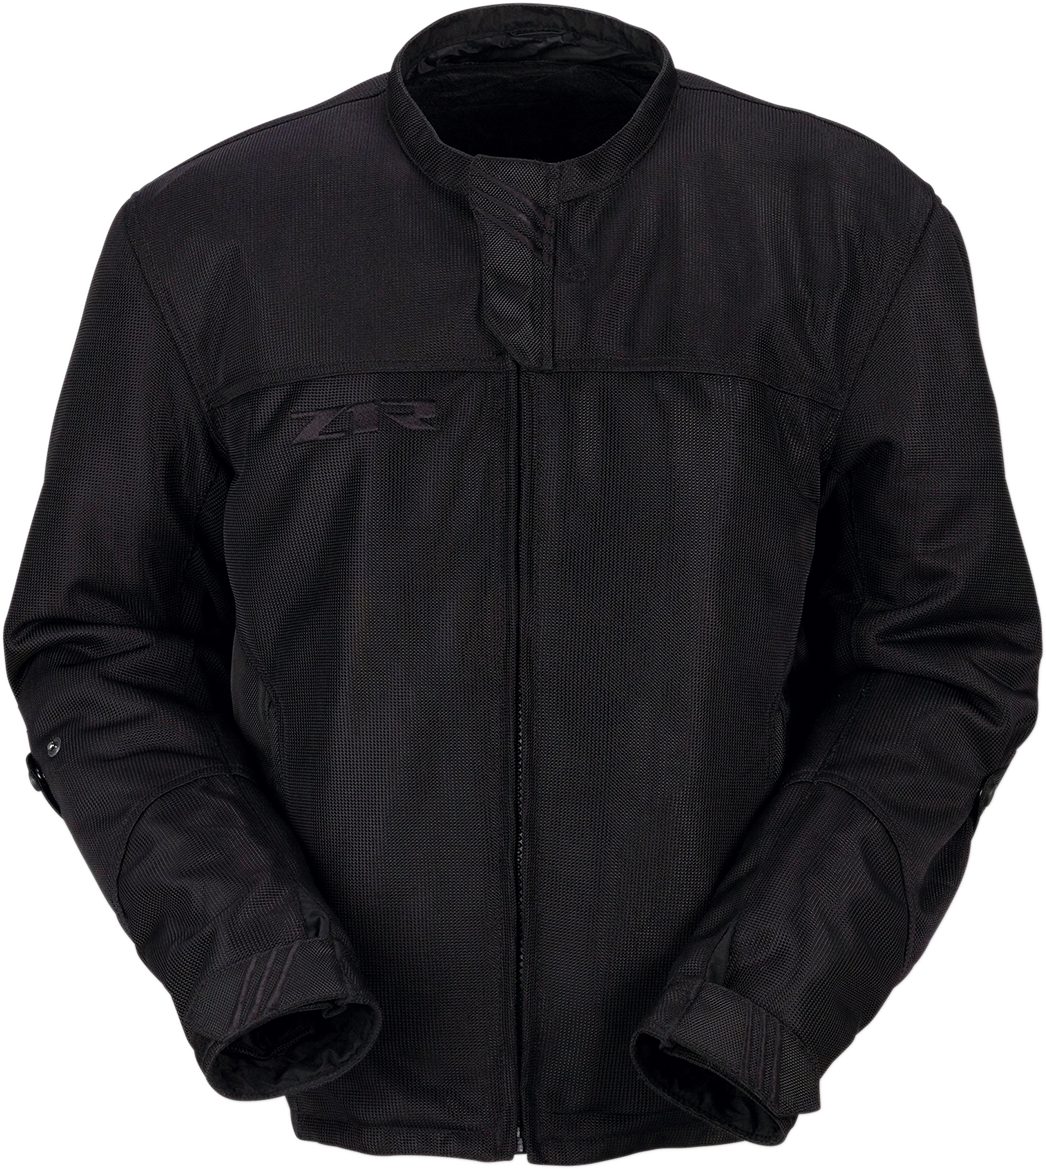 Z1R Gust Mesh Jacket - Black - XL 2820-4197